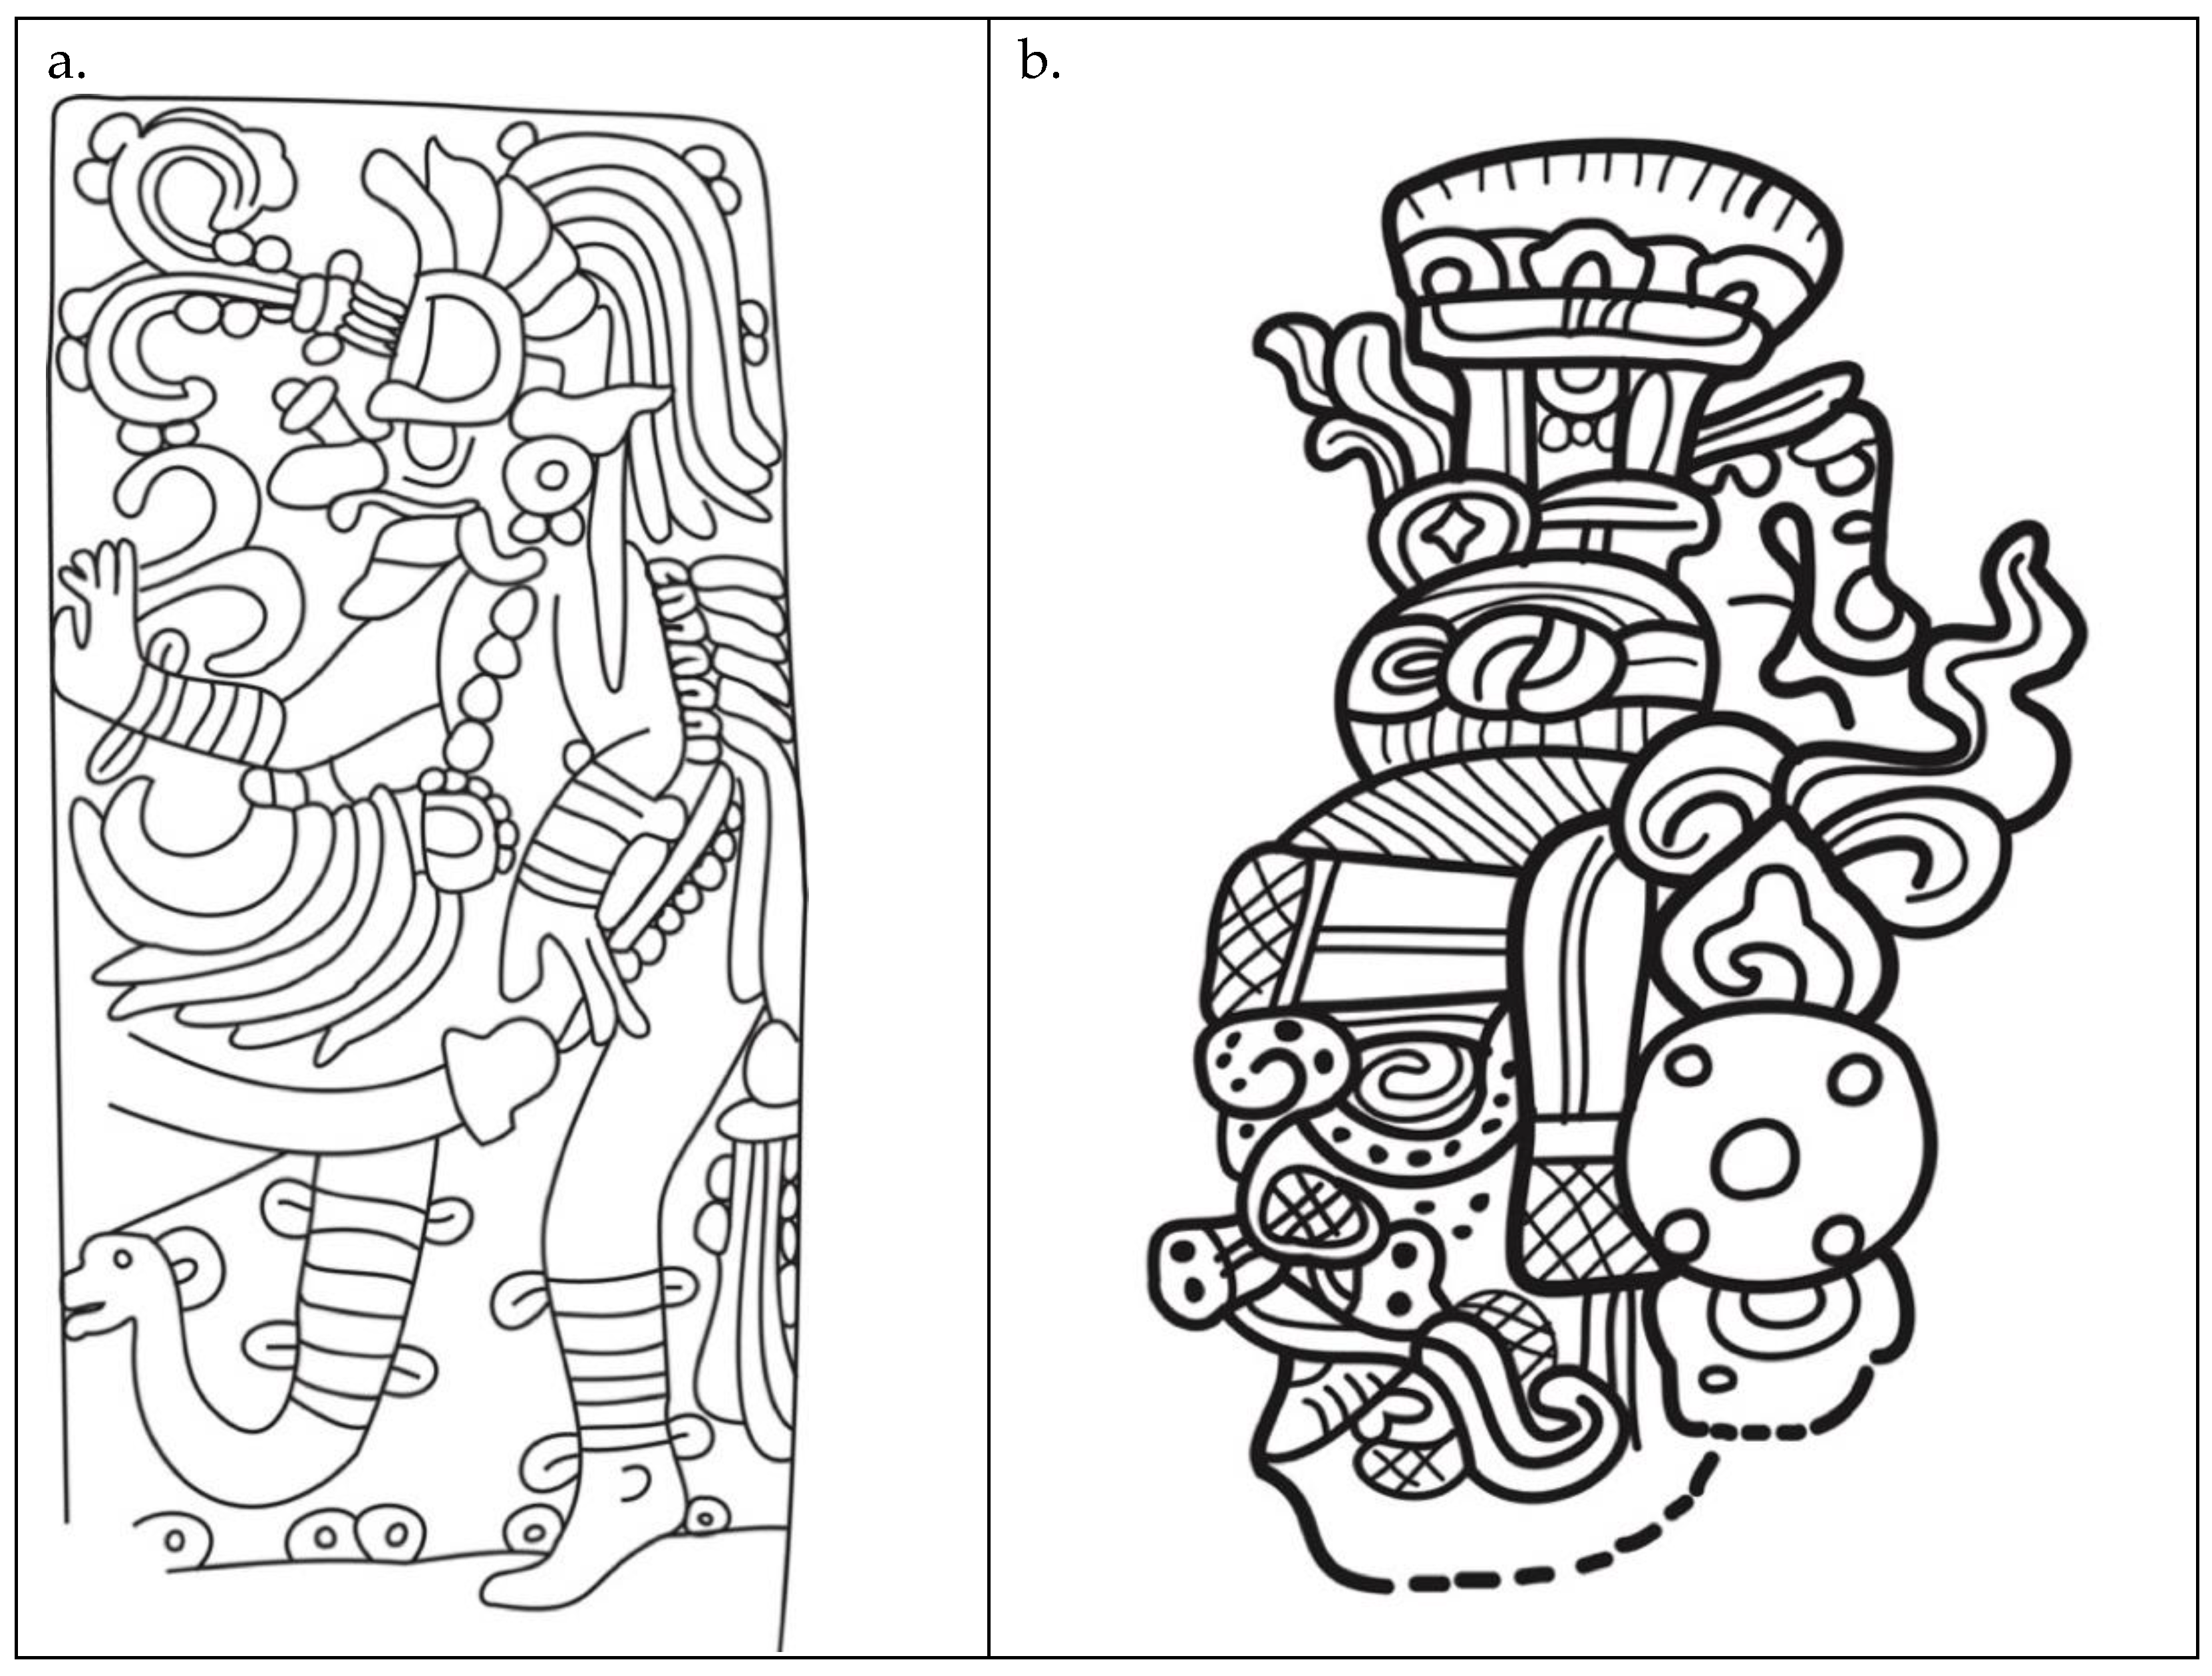 Aztec Empire on X: A yohualli glyph symbolizing a night star